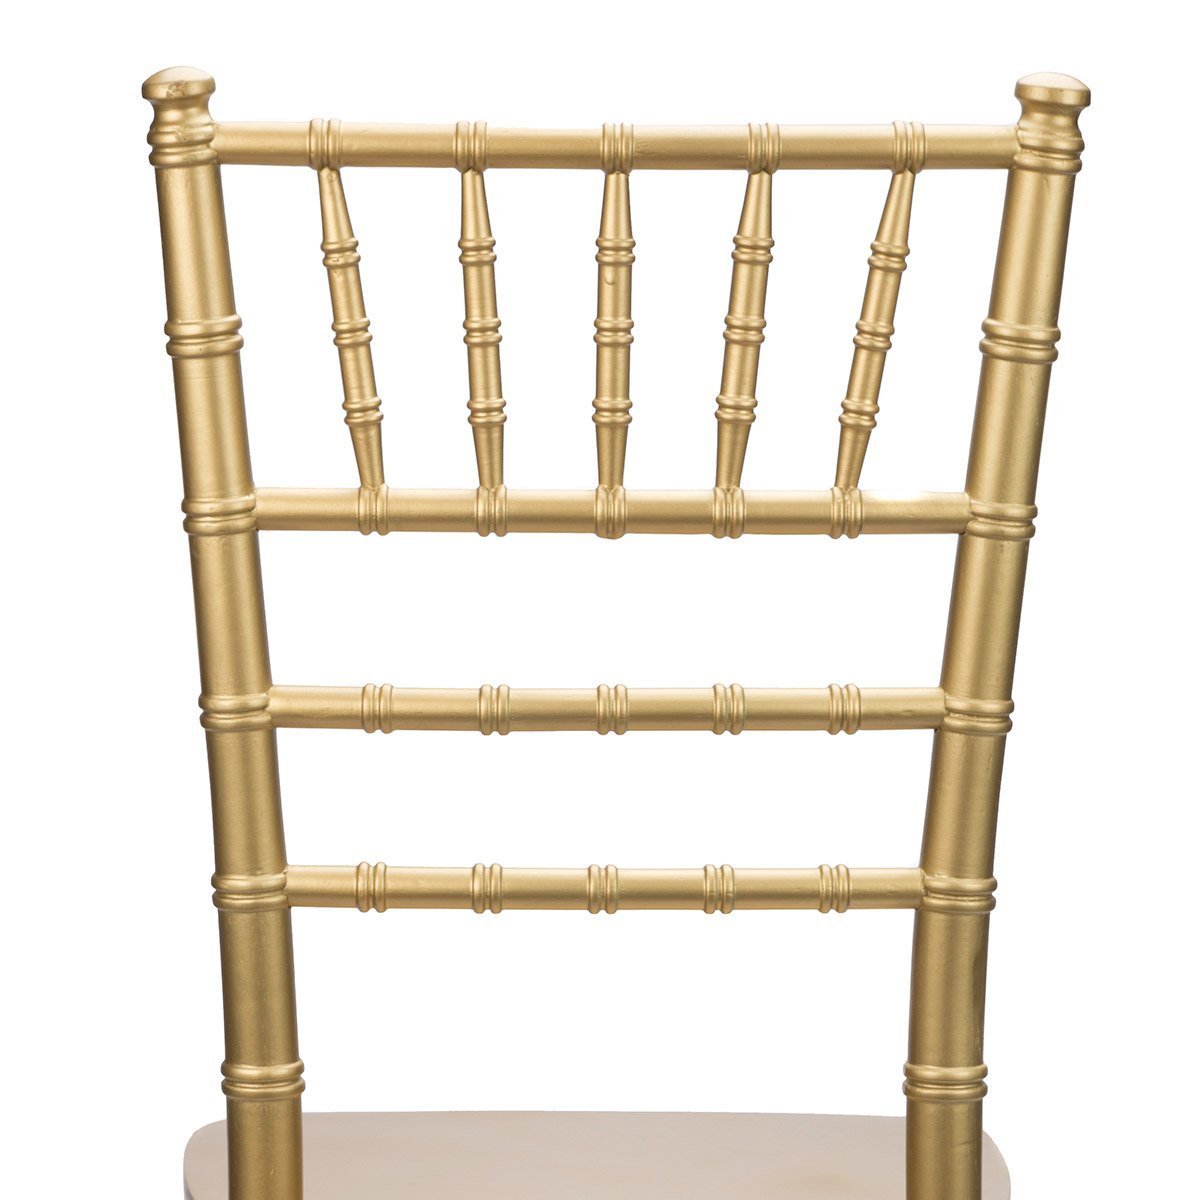 Gold Wood Chiavari Chair - JJ's Party House